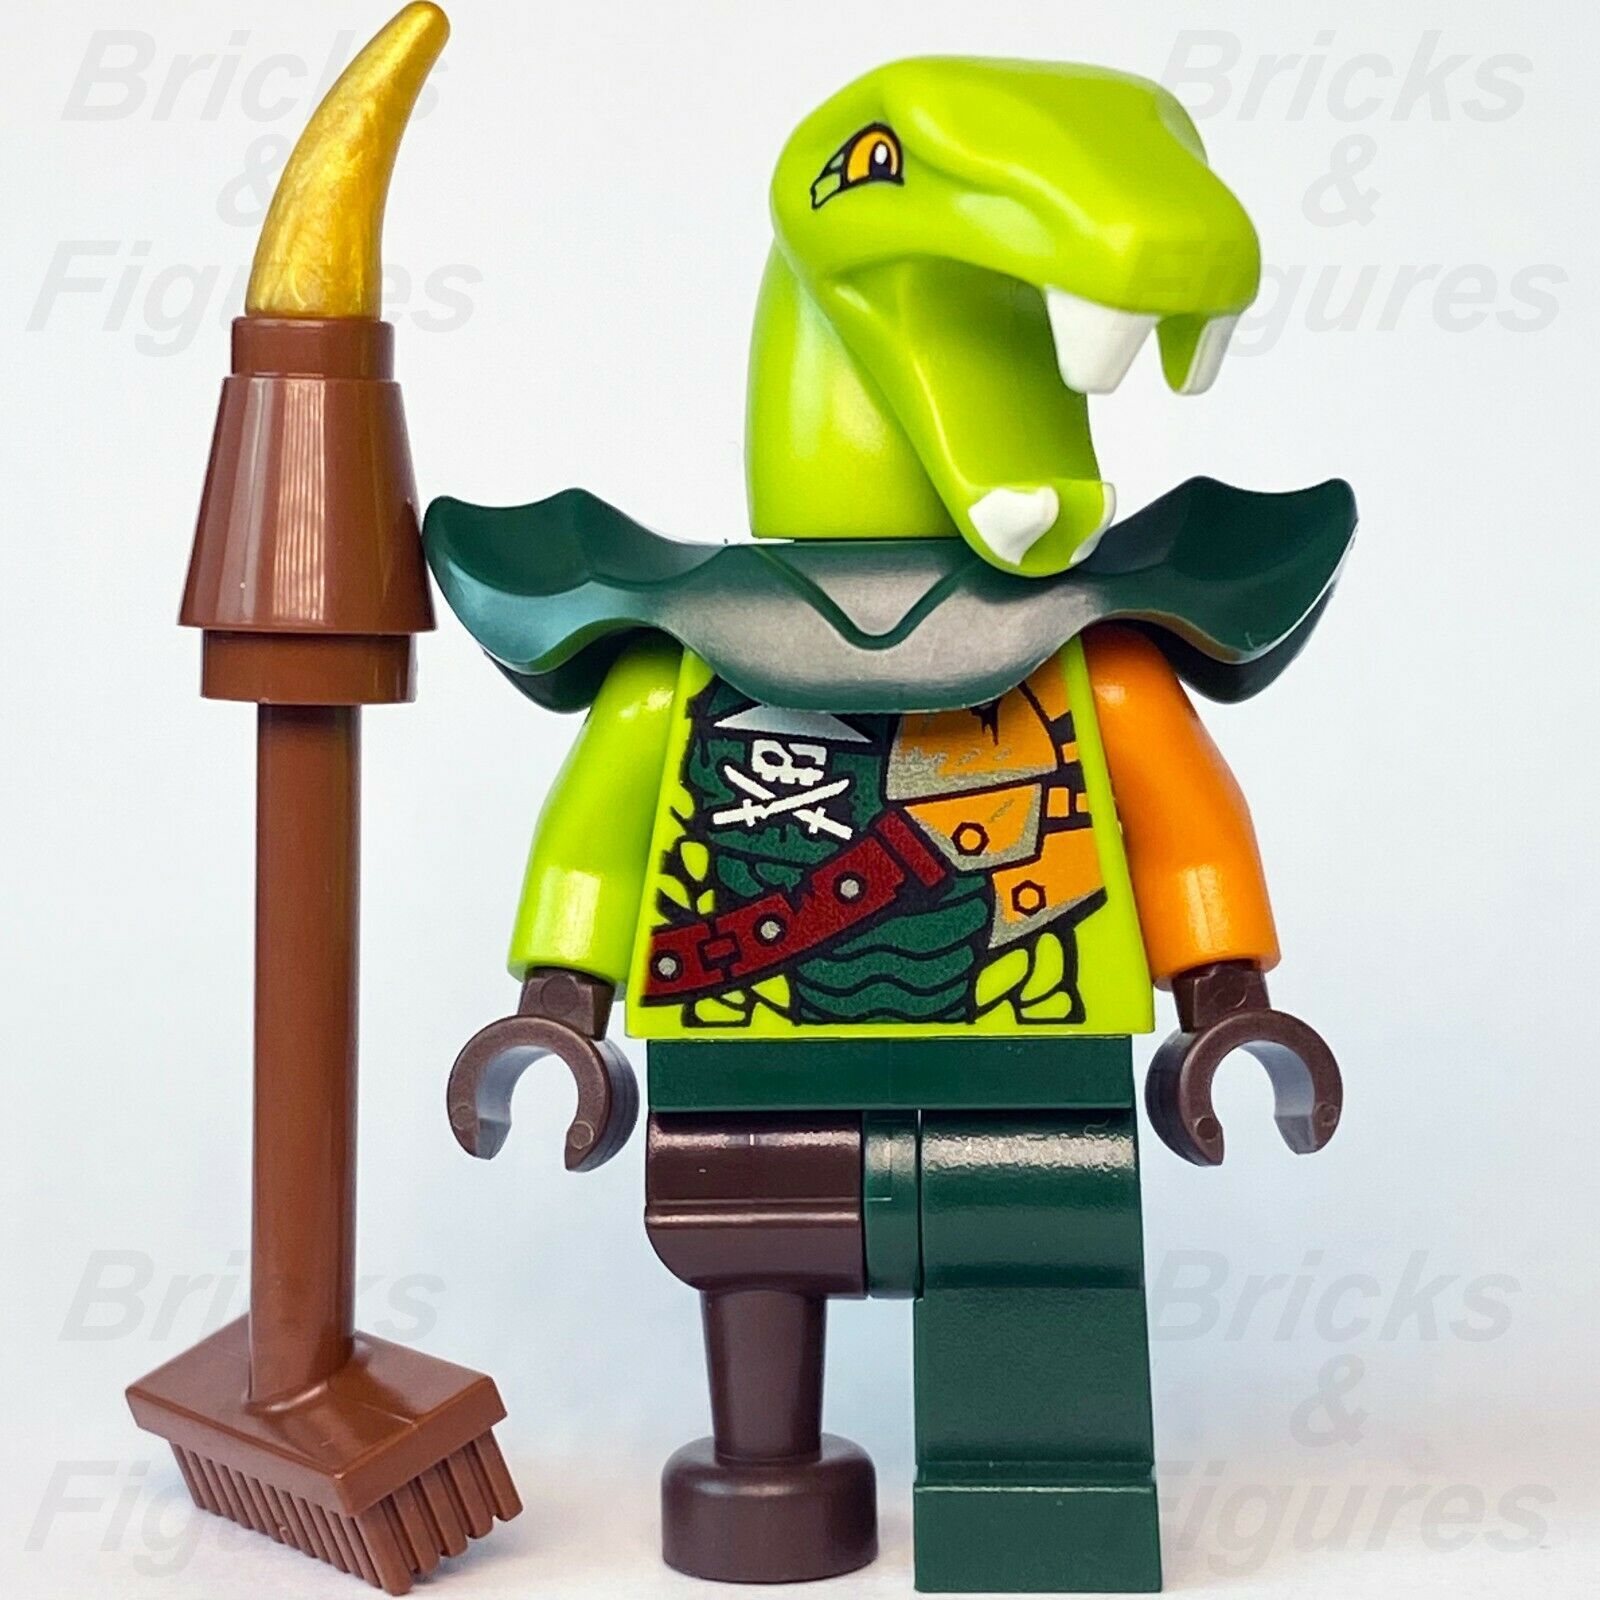 New Ninjago LEGO Clancee Sky Pirate Season 6 Skybound Minifigure 70594 - Bricks & Figures